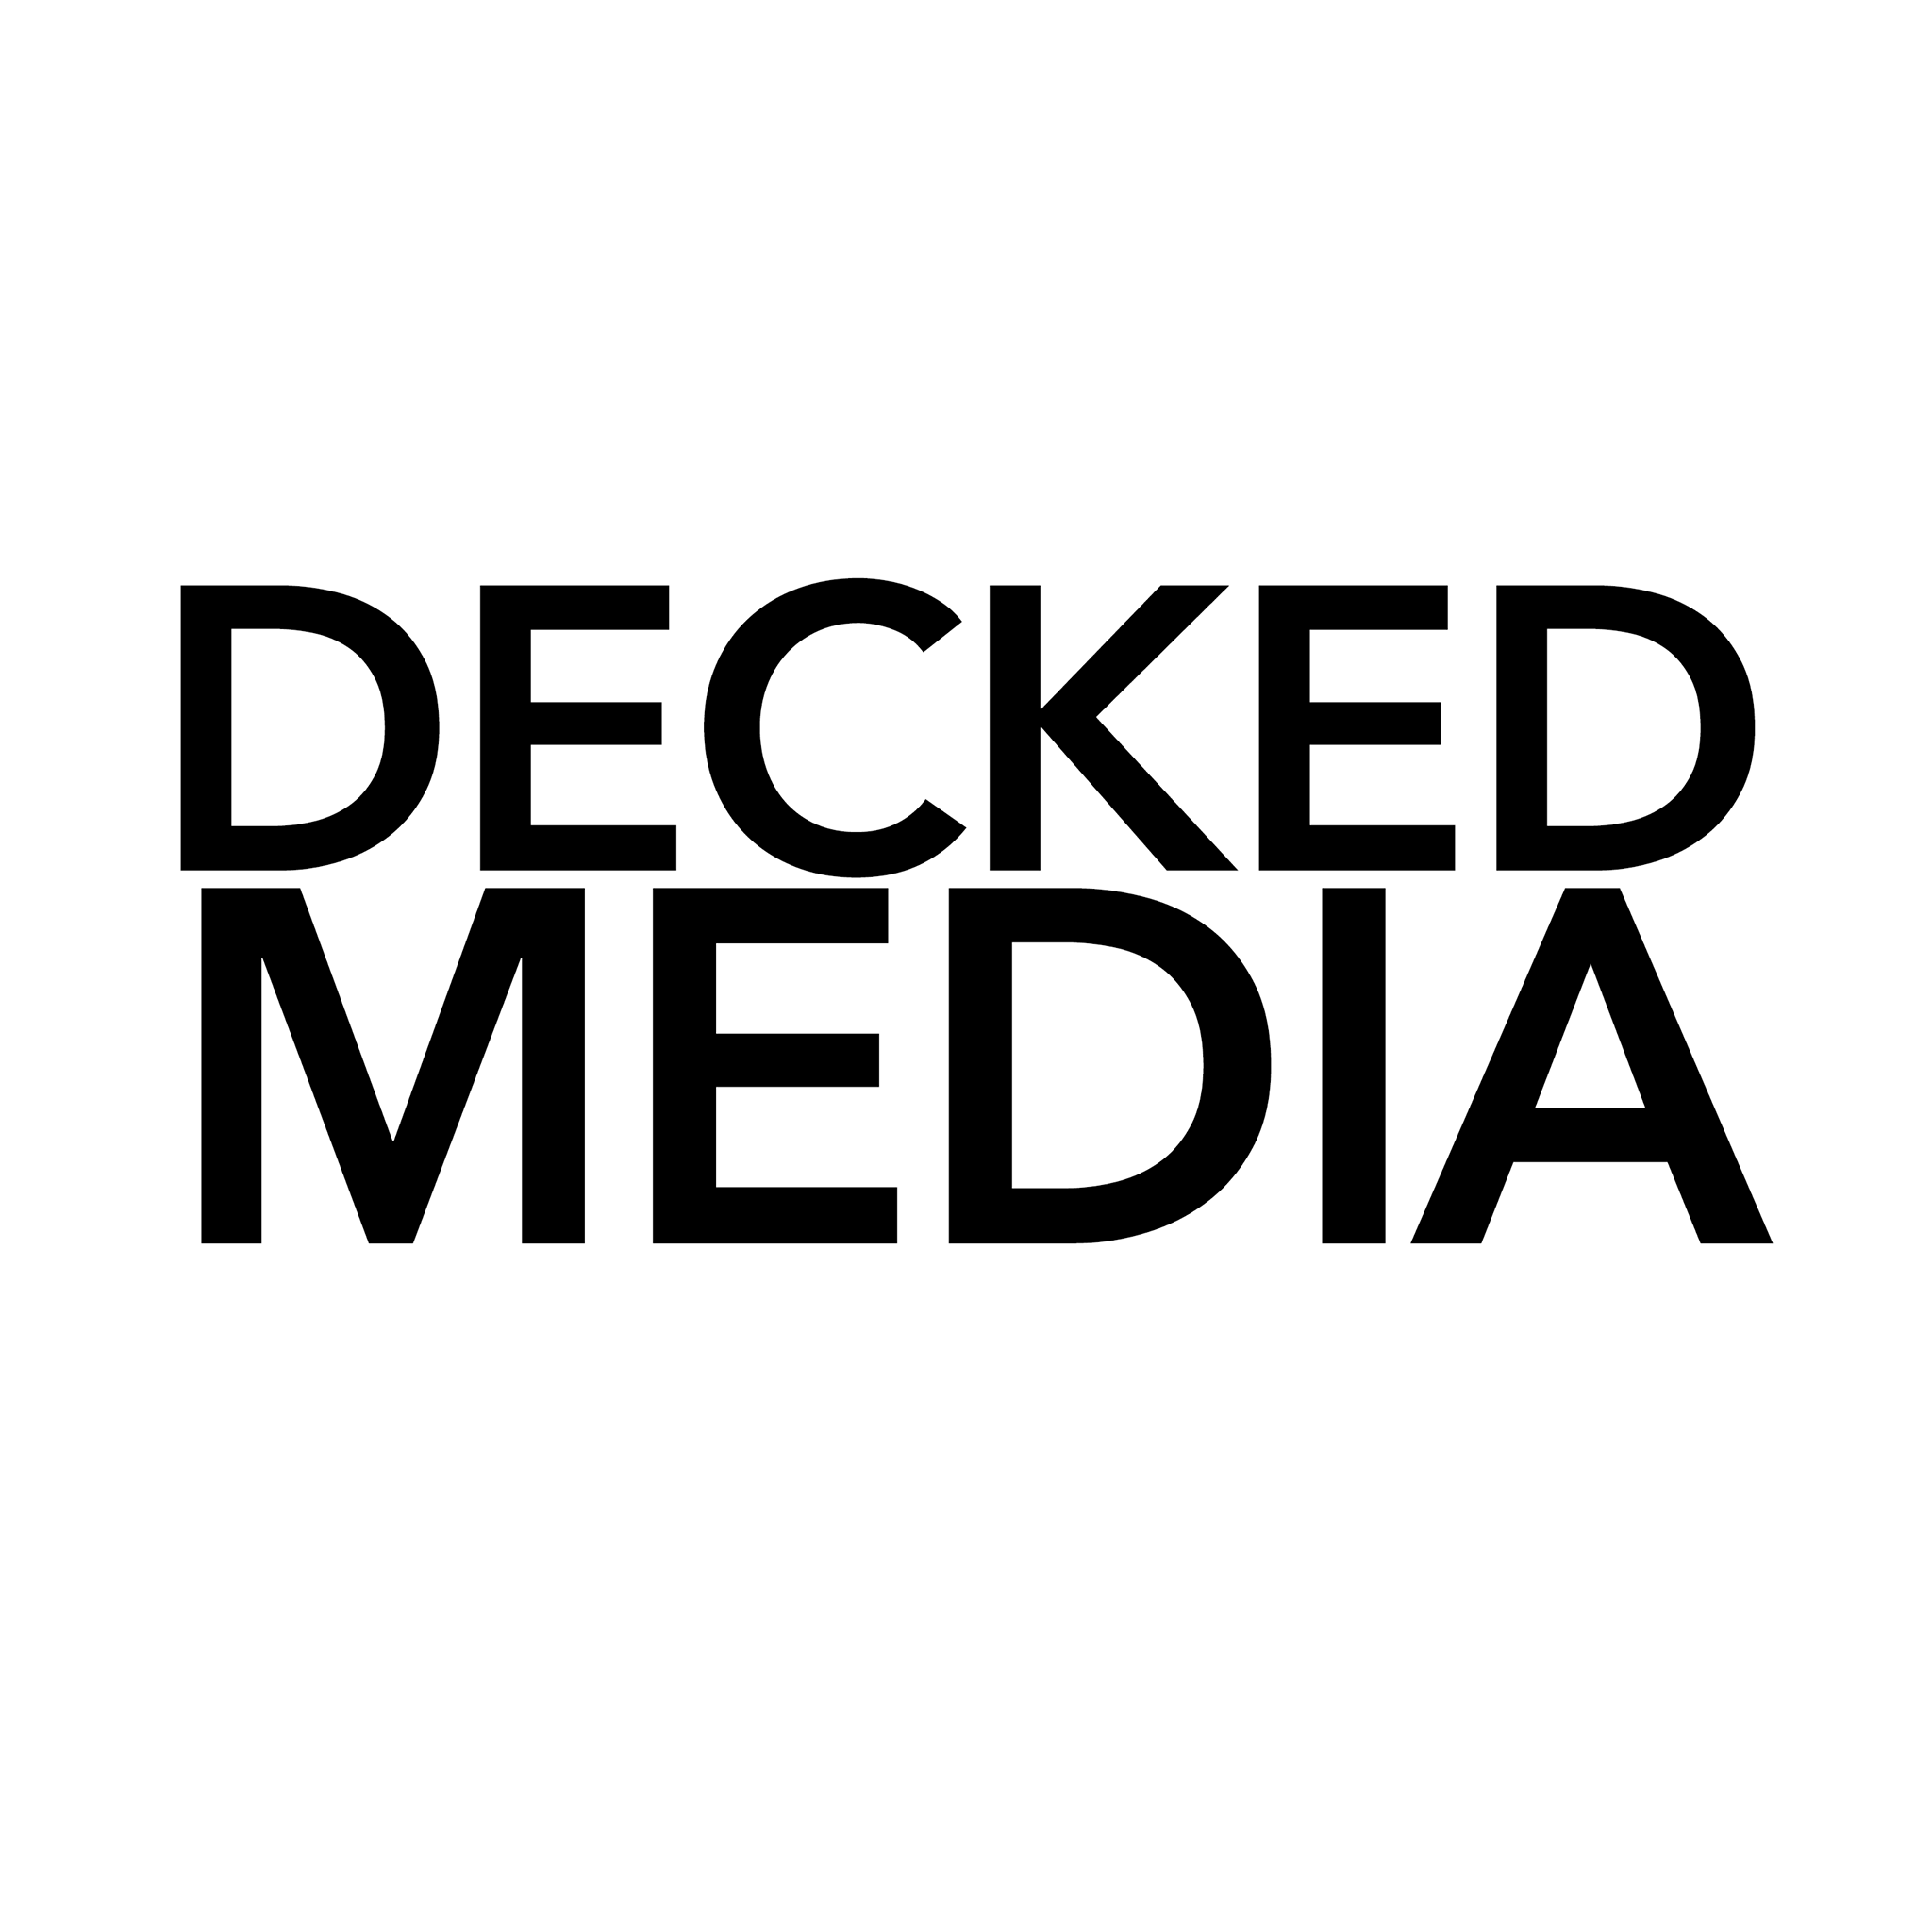 Decked media